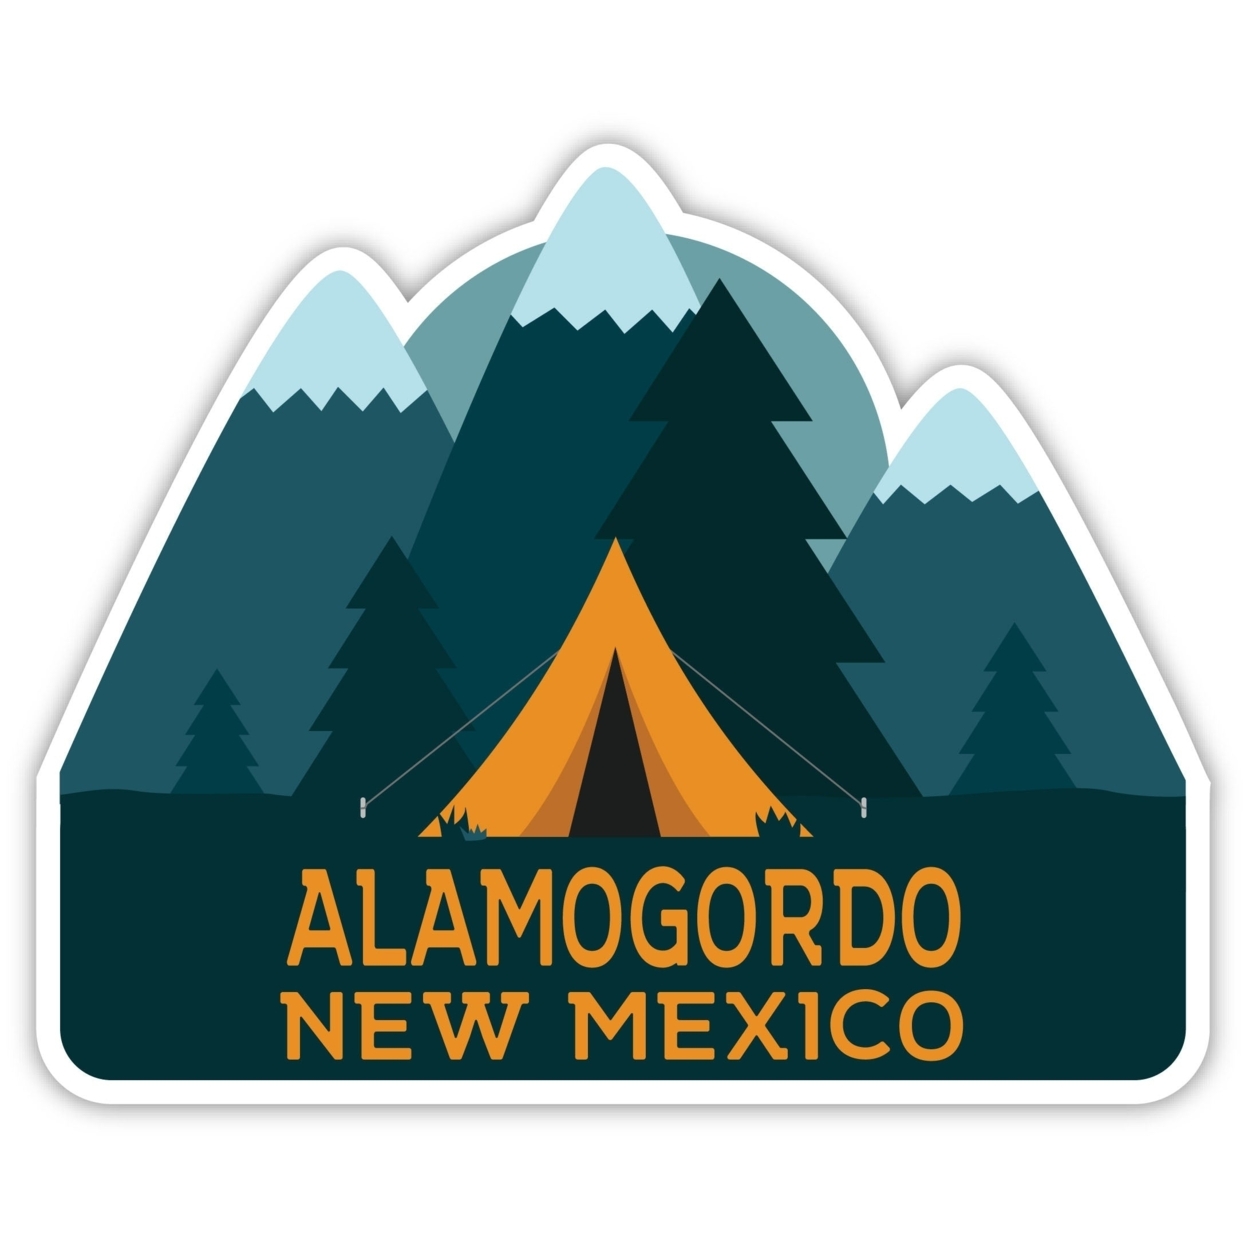 Alamogordo New Mexico Souvenir Decorative Stickers (Choose Theme And Size) - Single Unit, 10-Inch, Camp Life